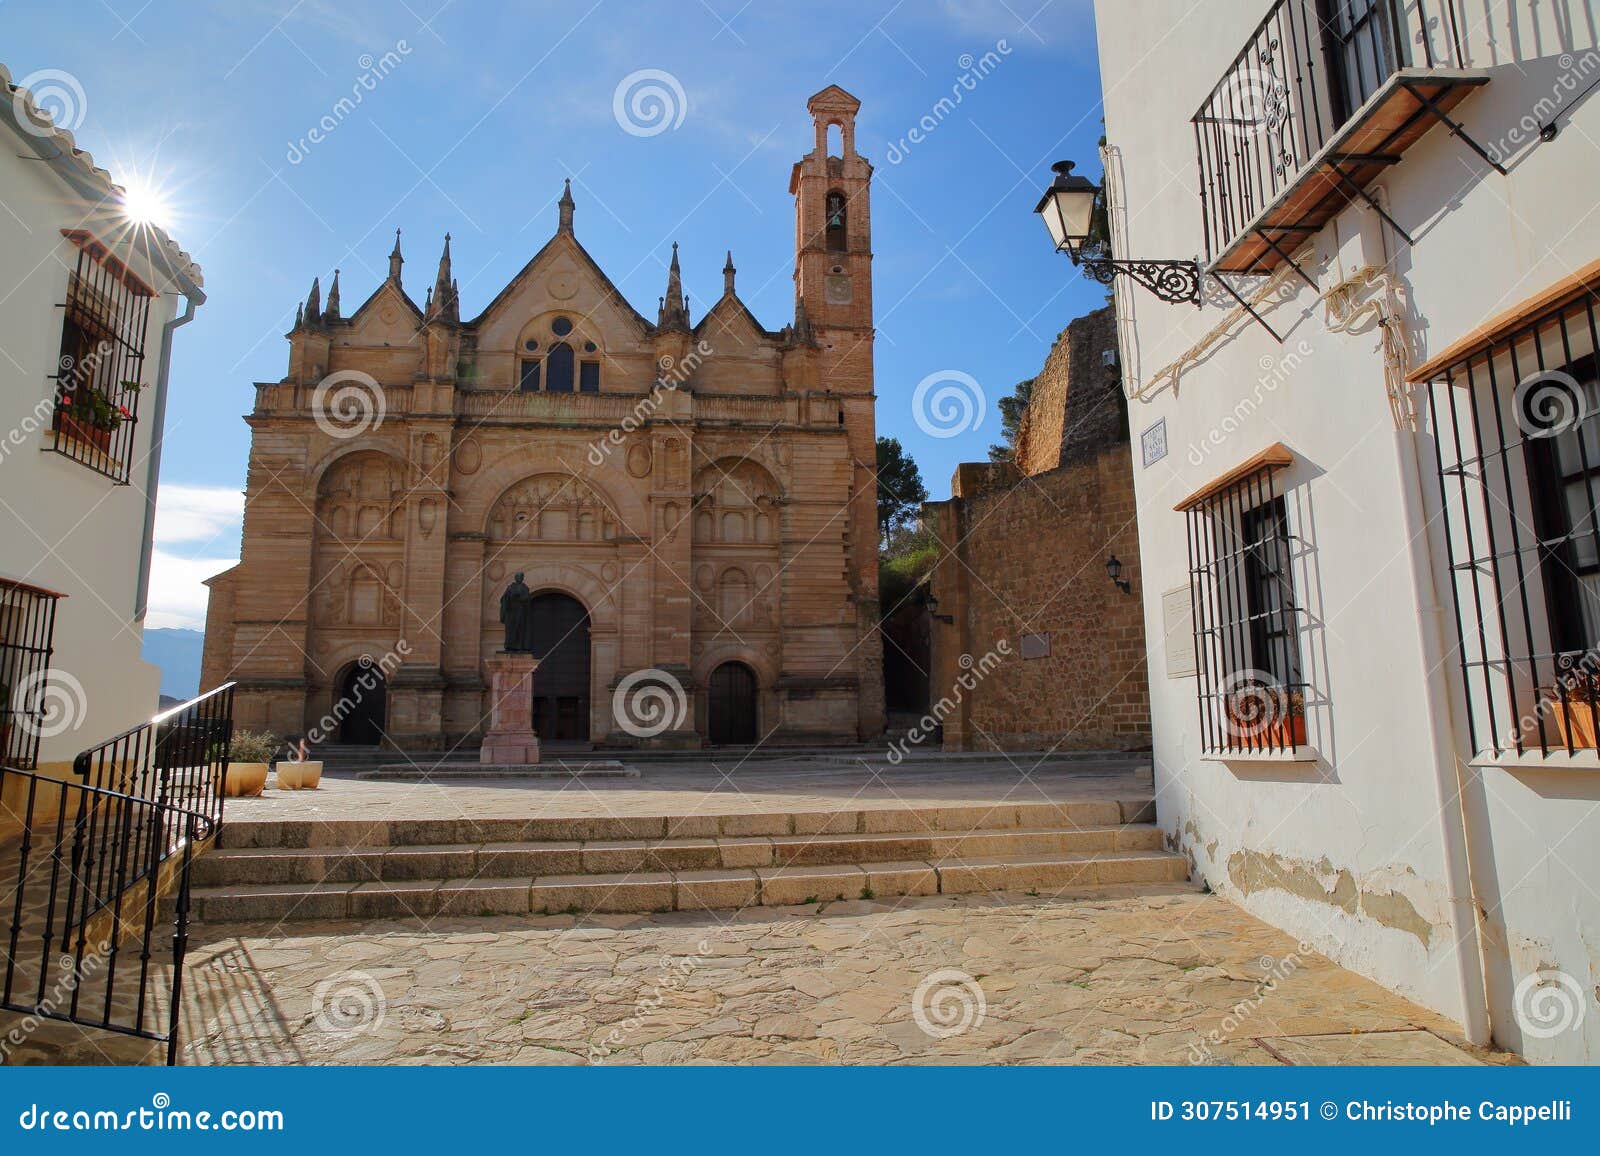 the impressive renaissance facade of the 15 century church colegiata de santa maria la mayor, antequera